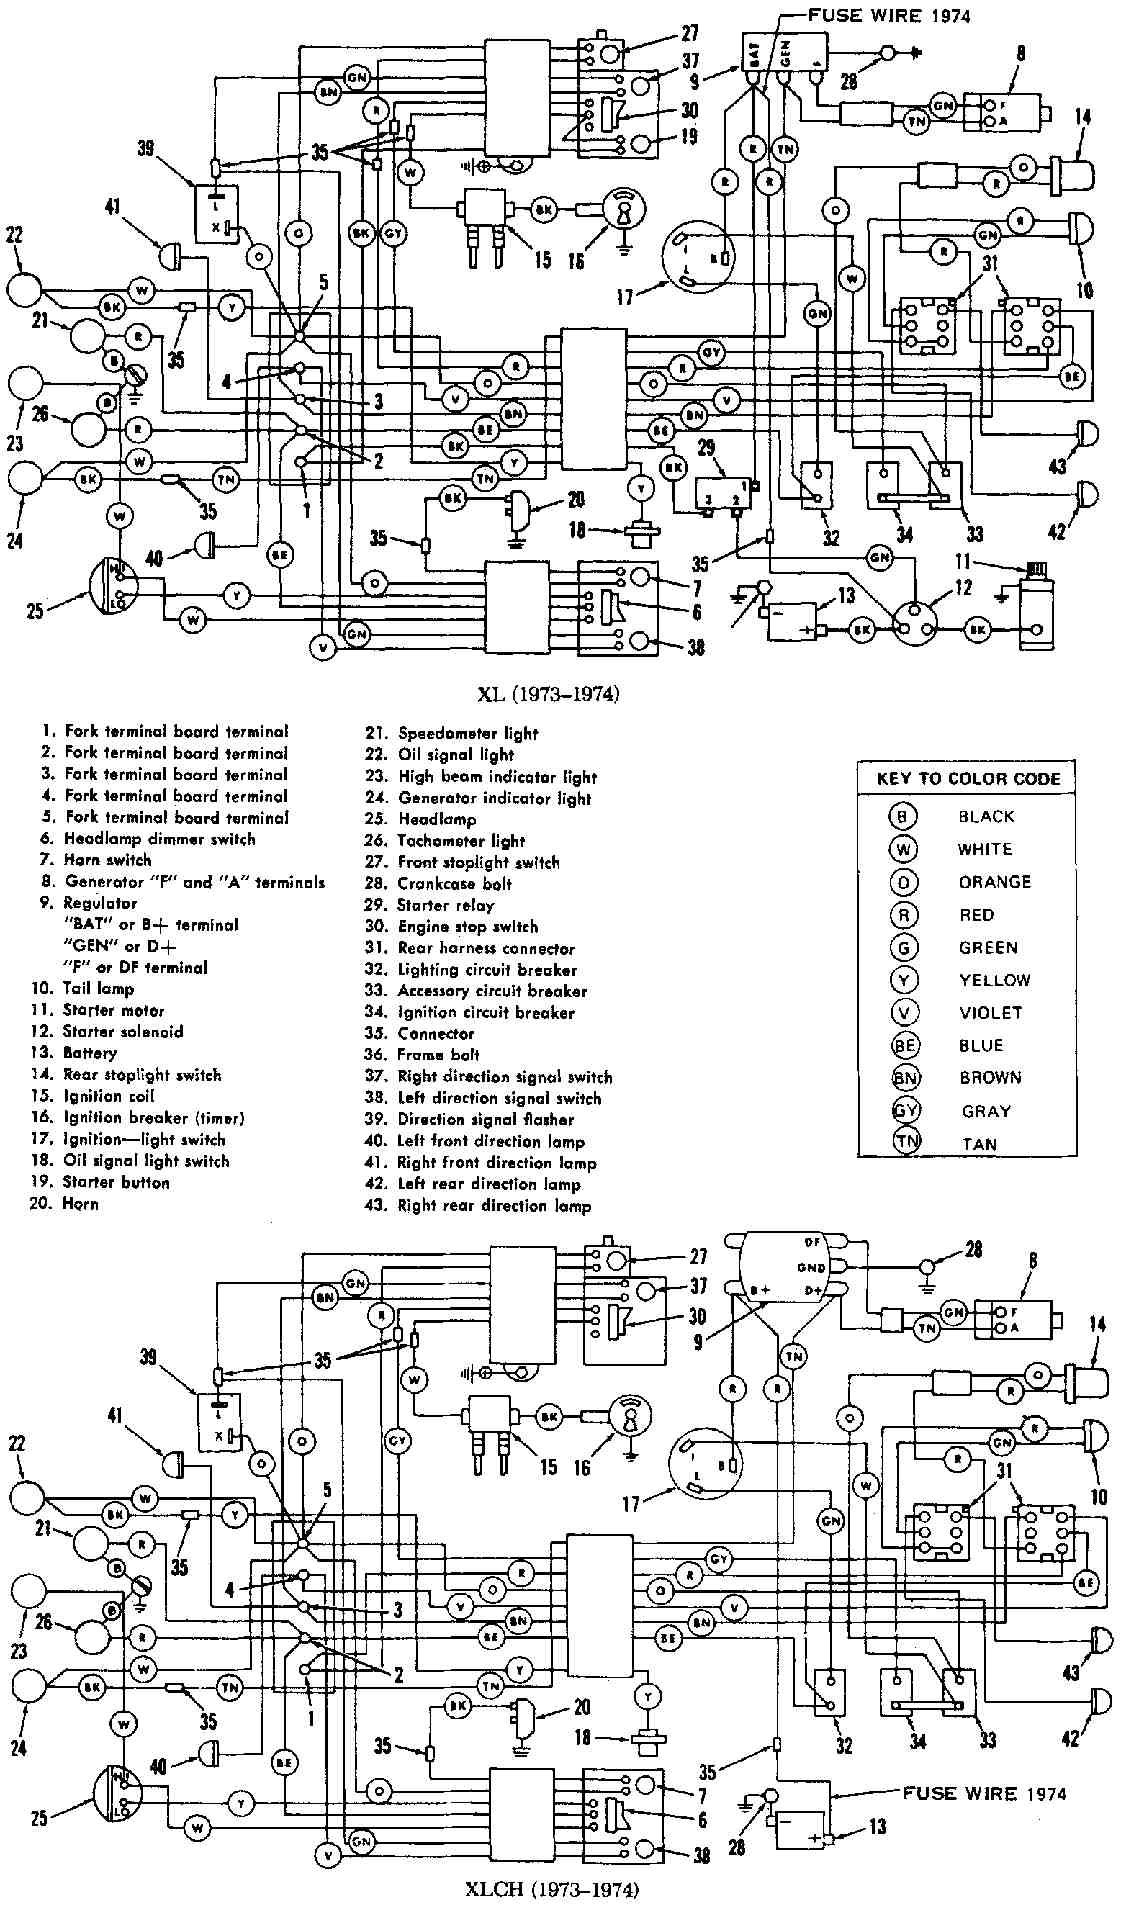 HARLEY DAVIDSON - Motorcycles Manual Pdf, Wiring Diagram & Fault Codes  MOTORCYCLE Manuals PDF & Wiring Diagrams